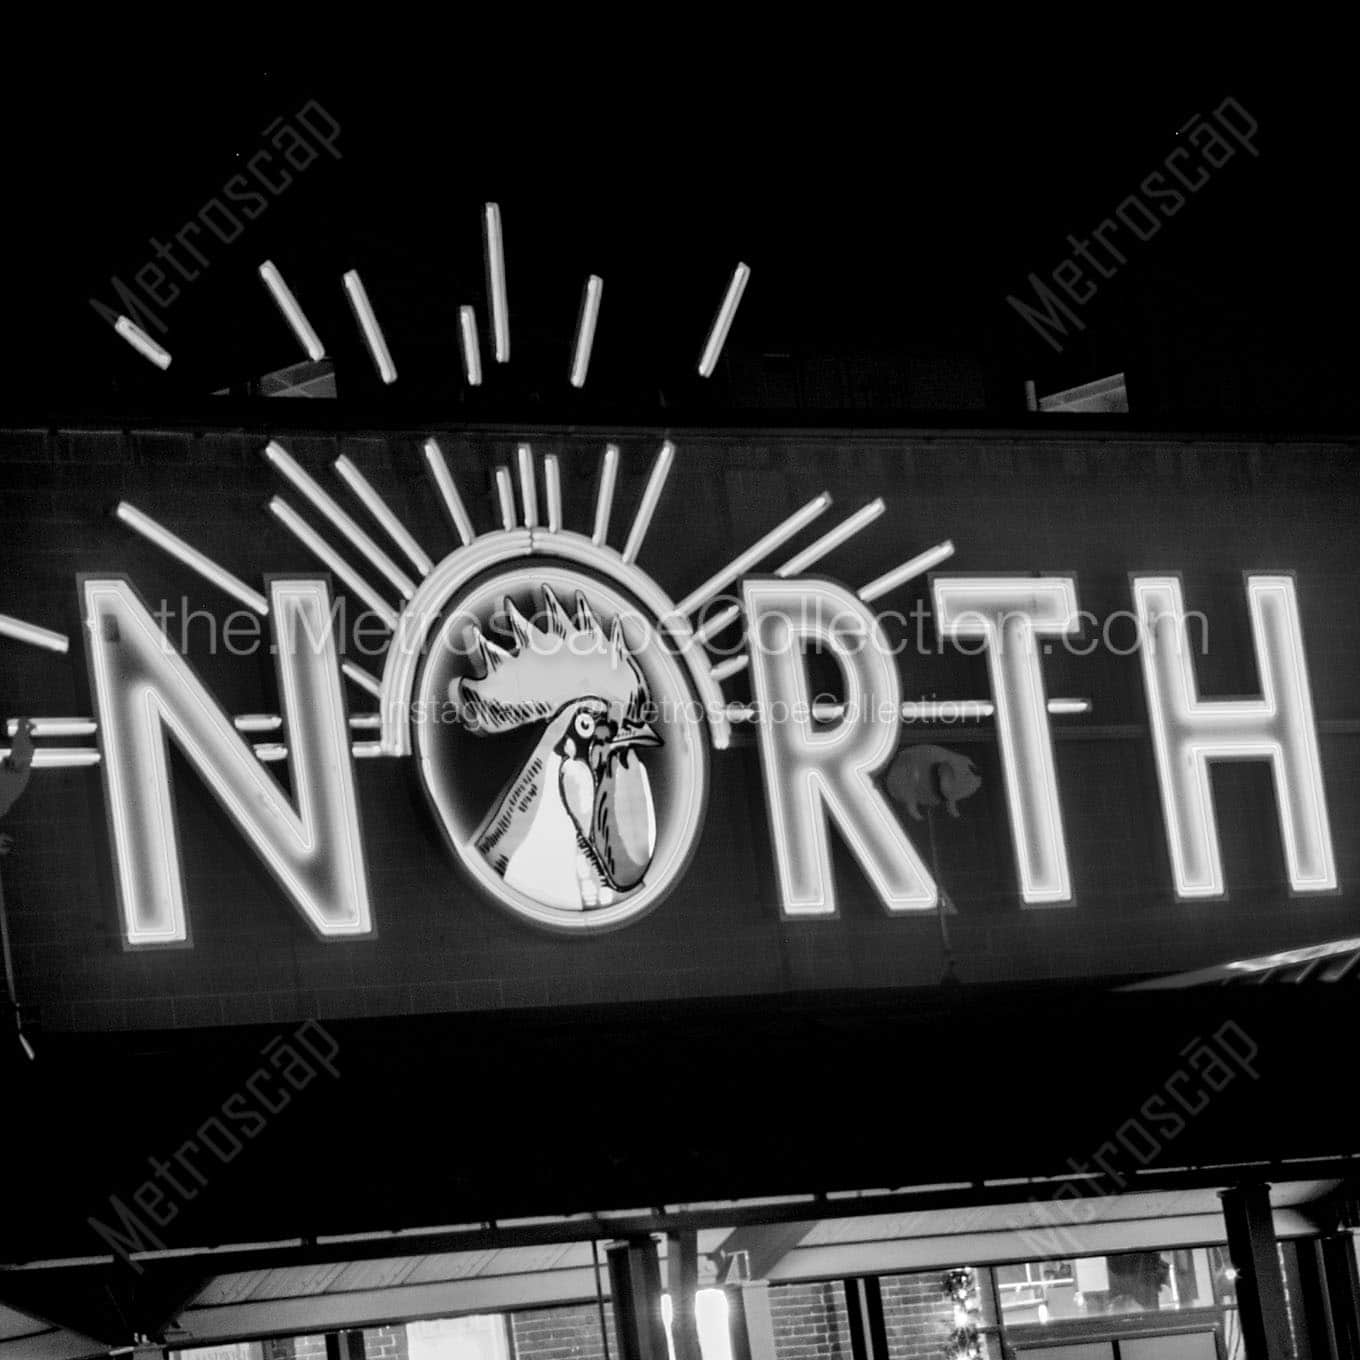 north market sign at night Black & White Office Art